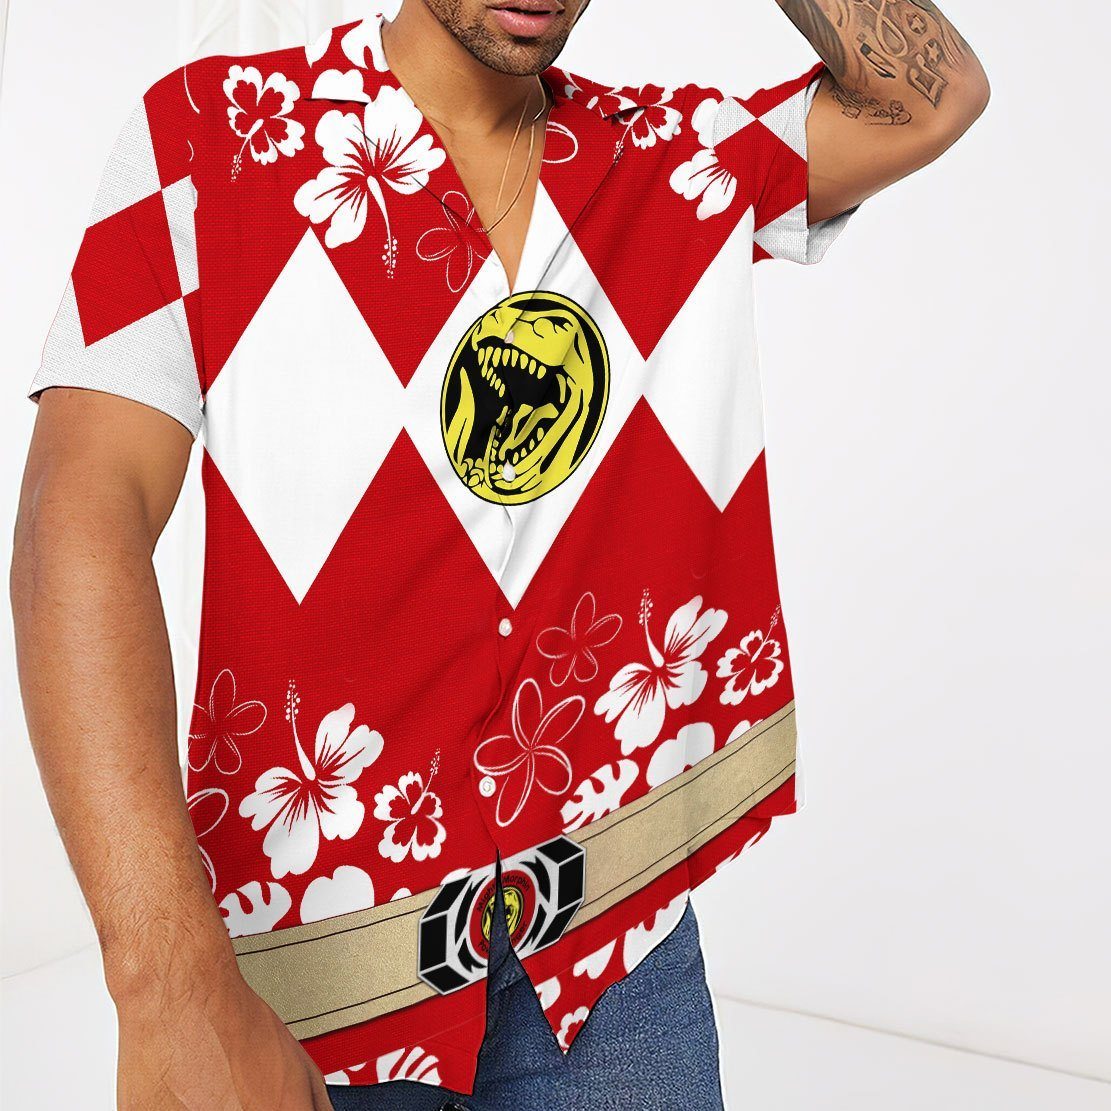 Texas Rangers Jersey Hawaiian Shirt And Short Set Gift Men Women -  Freedomdesign